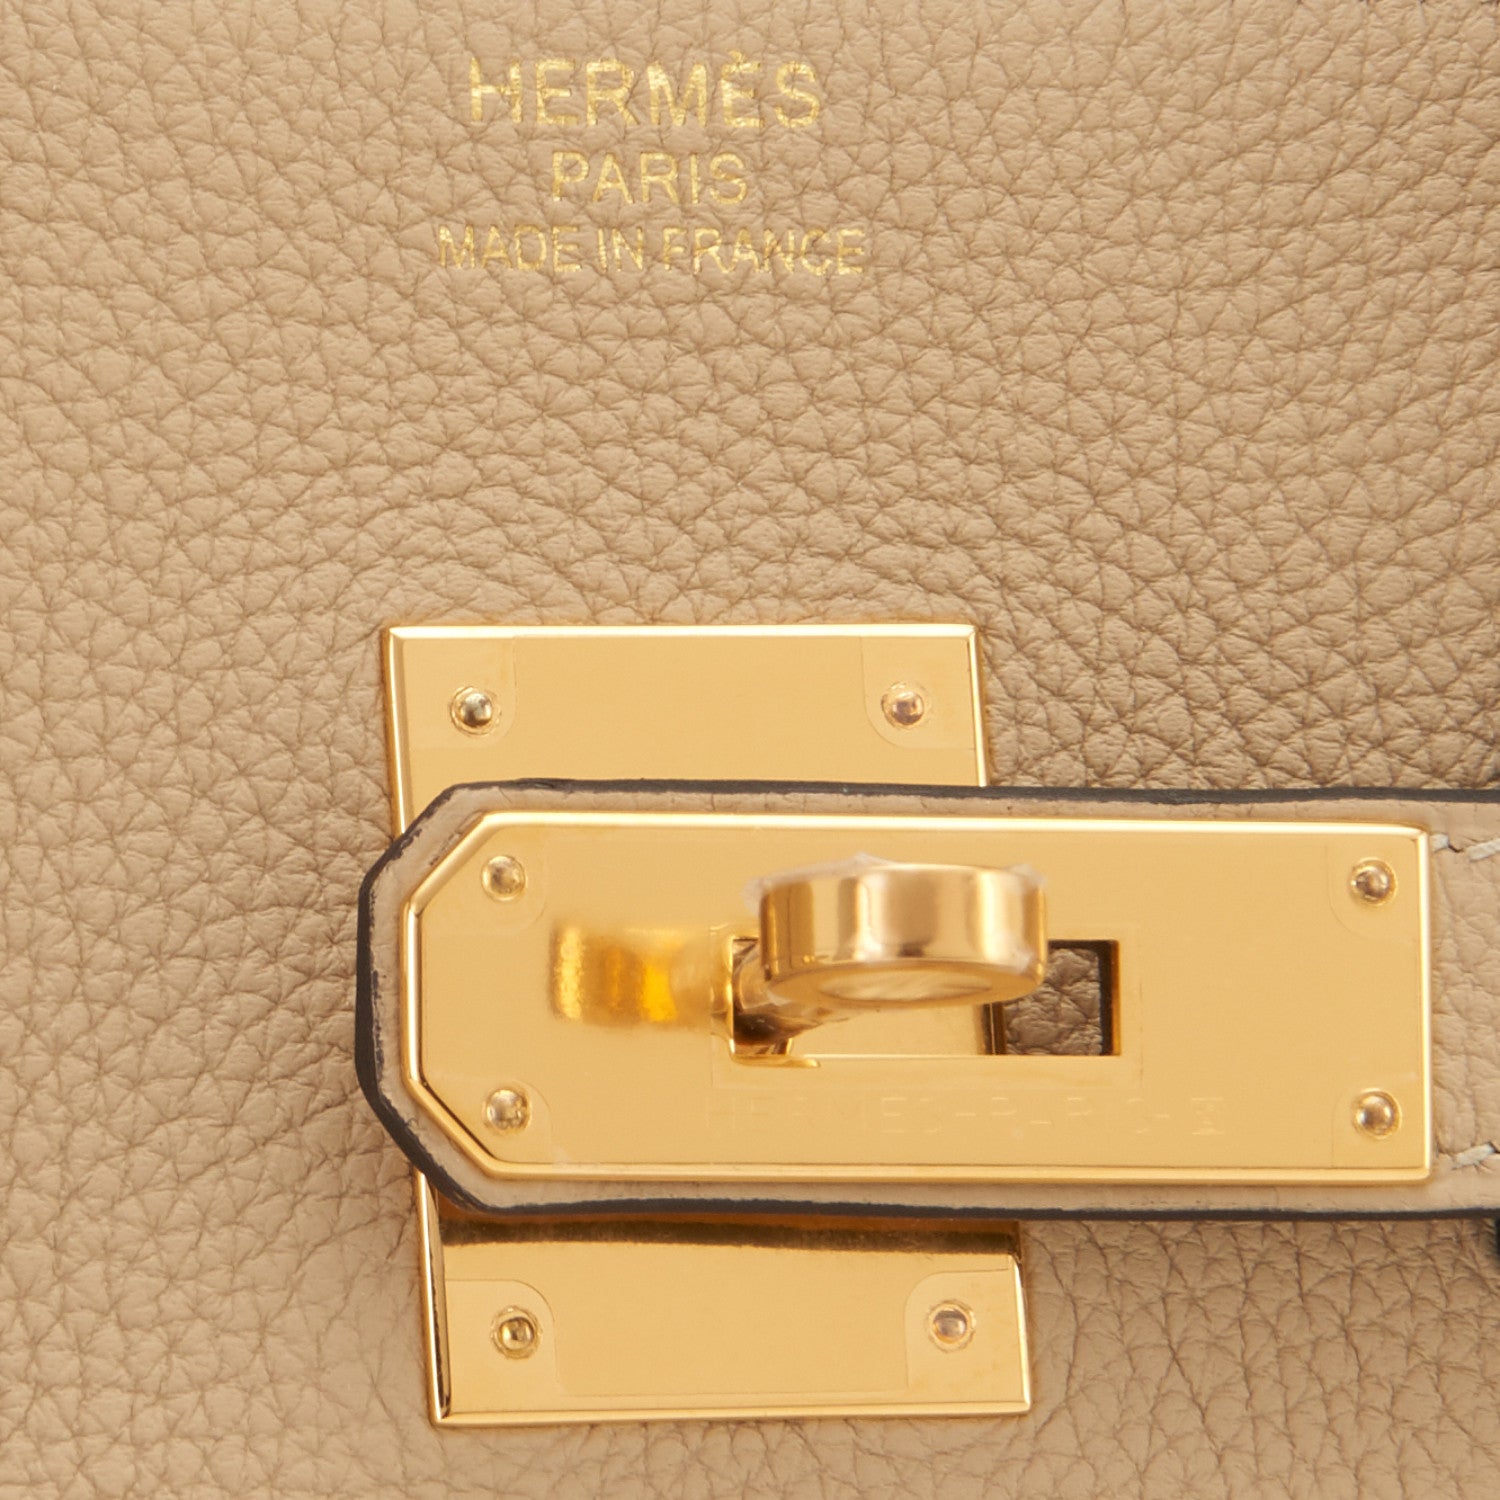 Hermes Etoupe Togo 35cm Birkin Bag Gold Hardware - Chicjoy